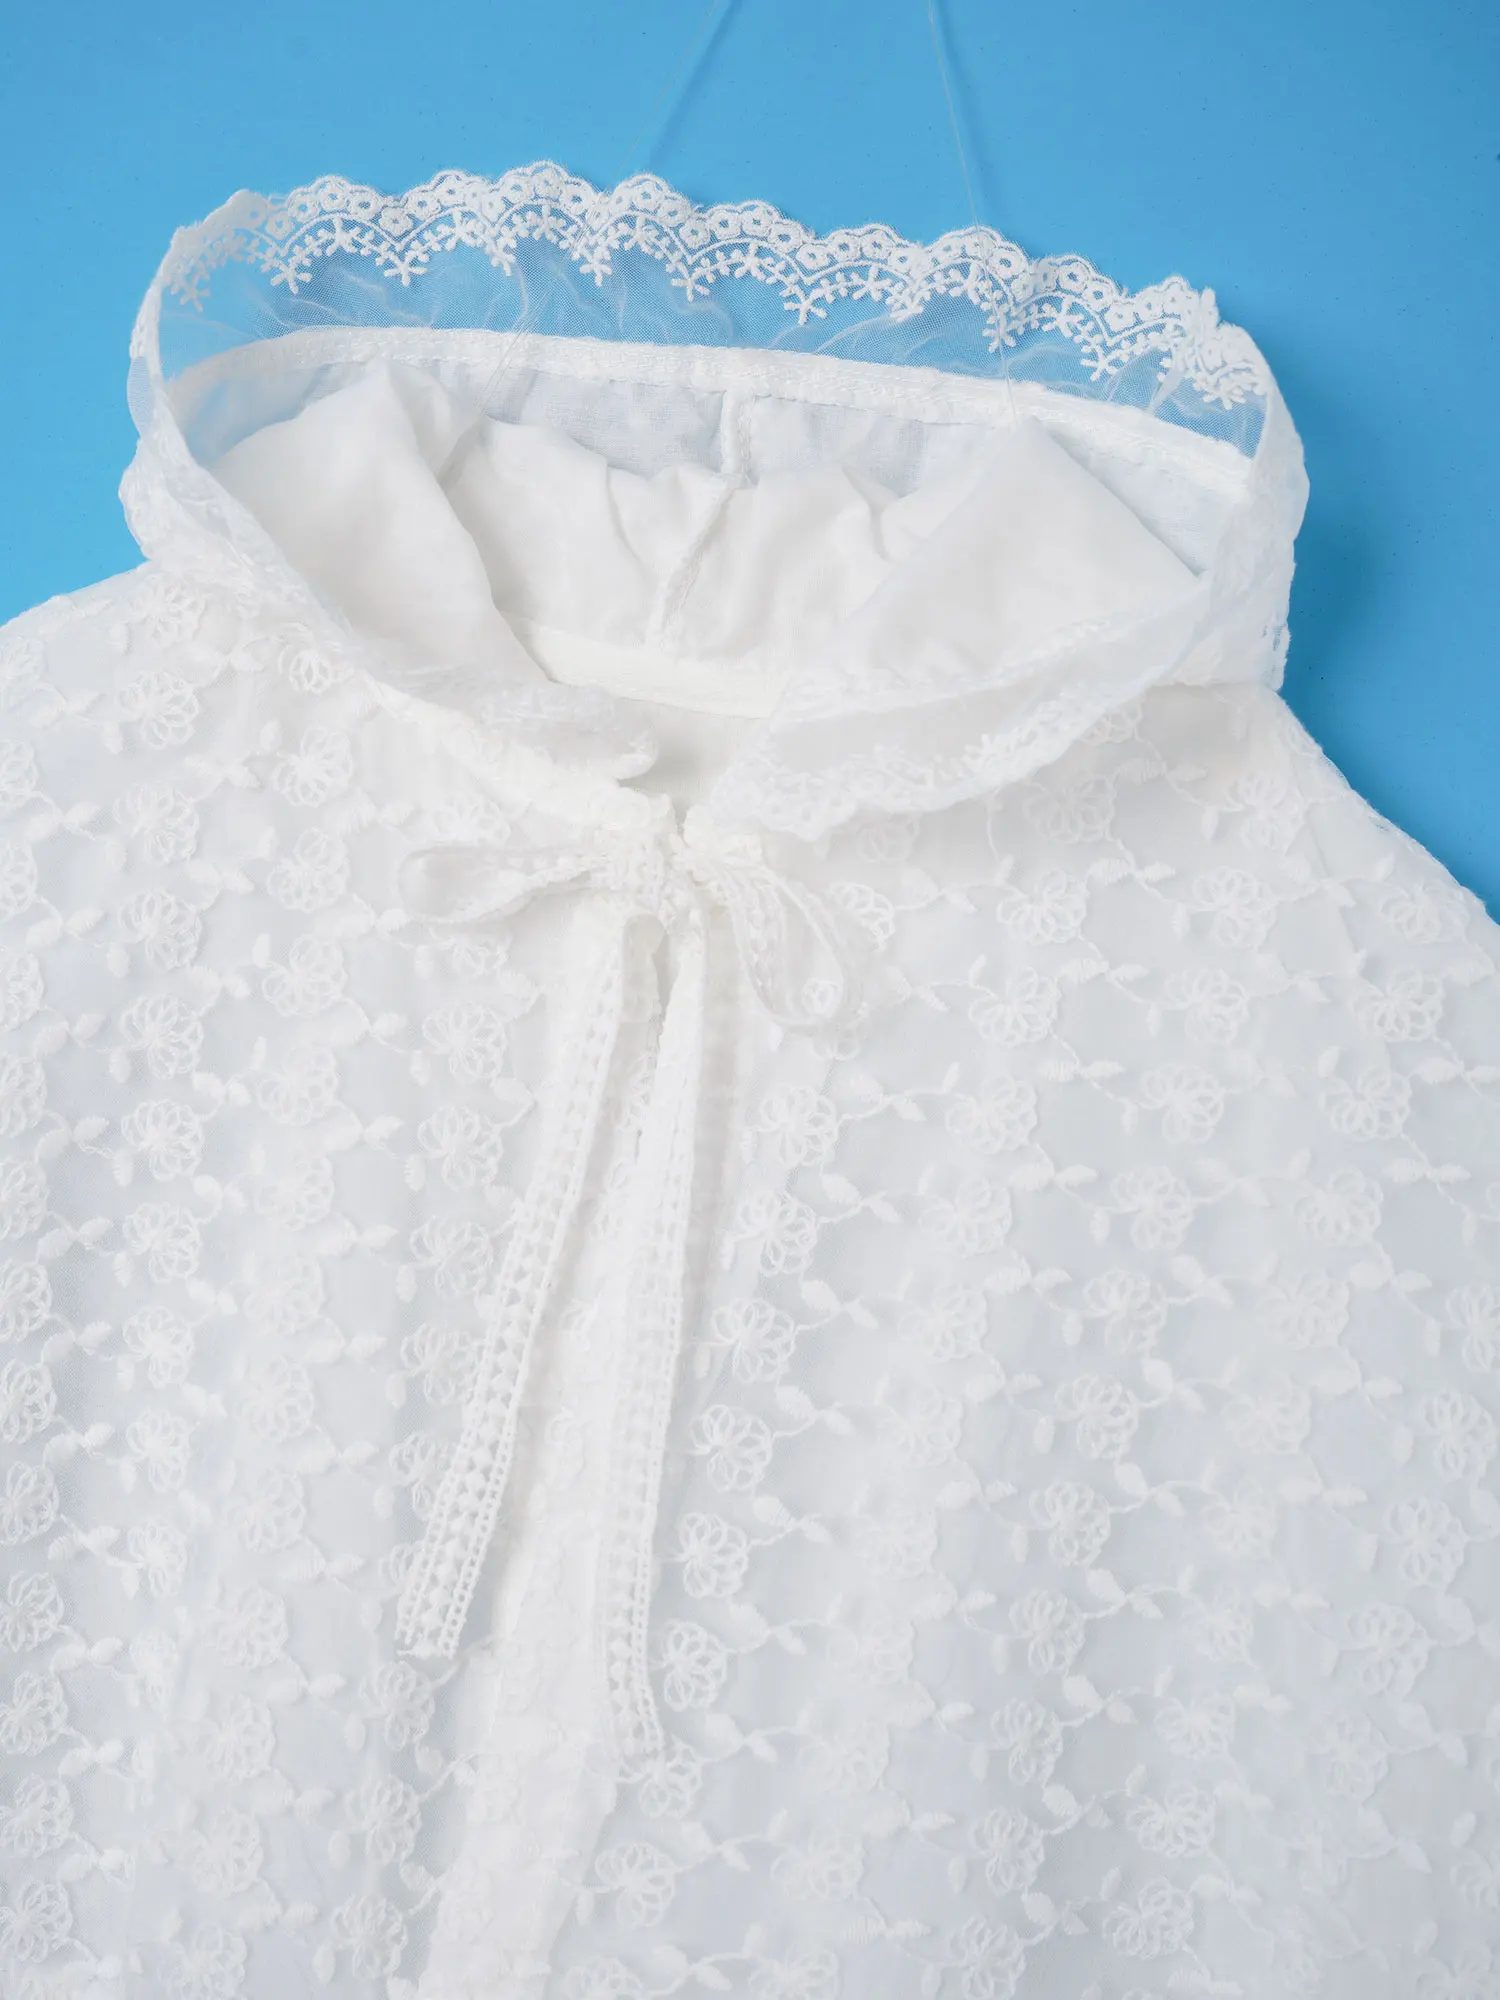 bebê meninas bordados boleros formal laço festa de casamento manto casaco bebê menina princesa baptismo batismo capa da criança outerwear